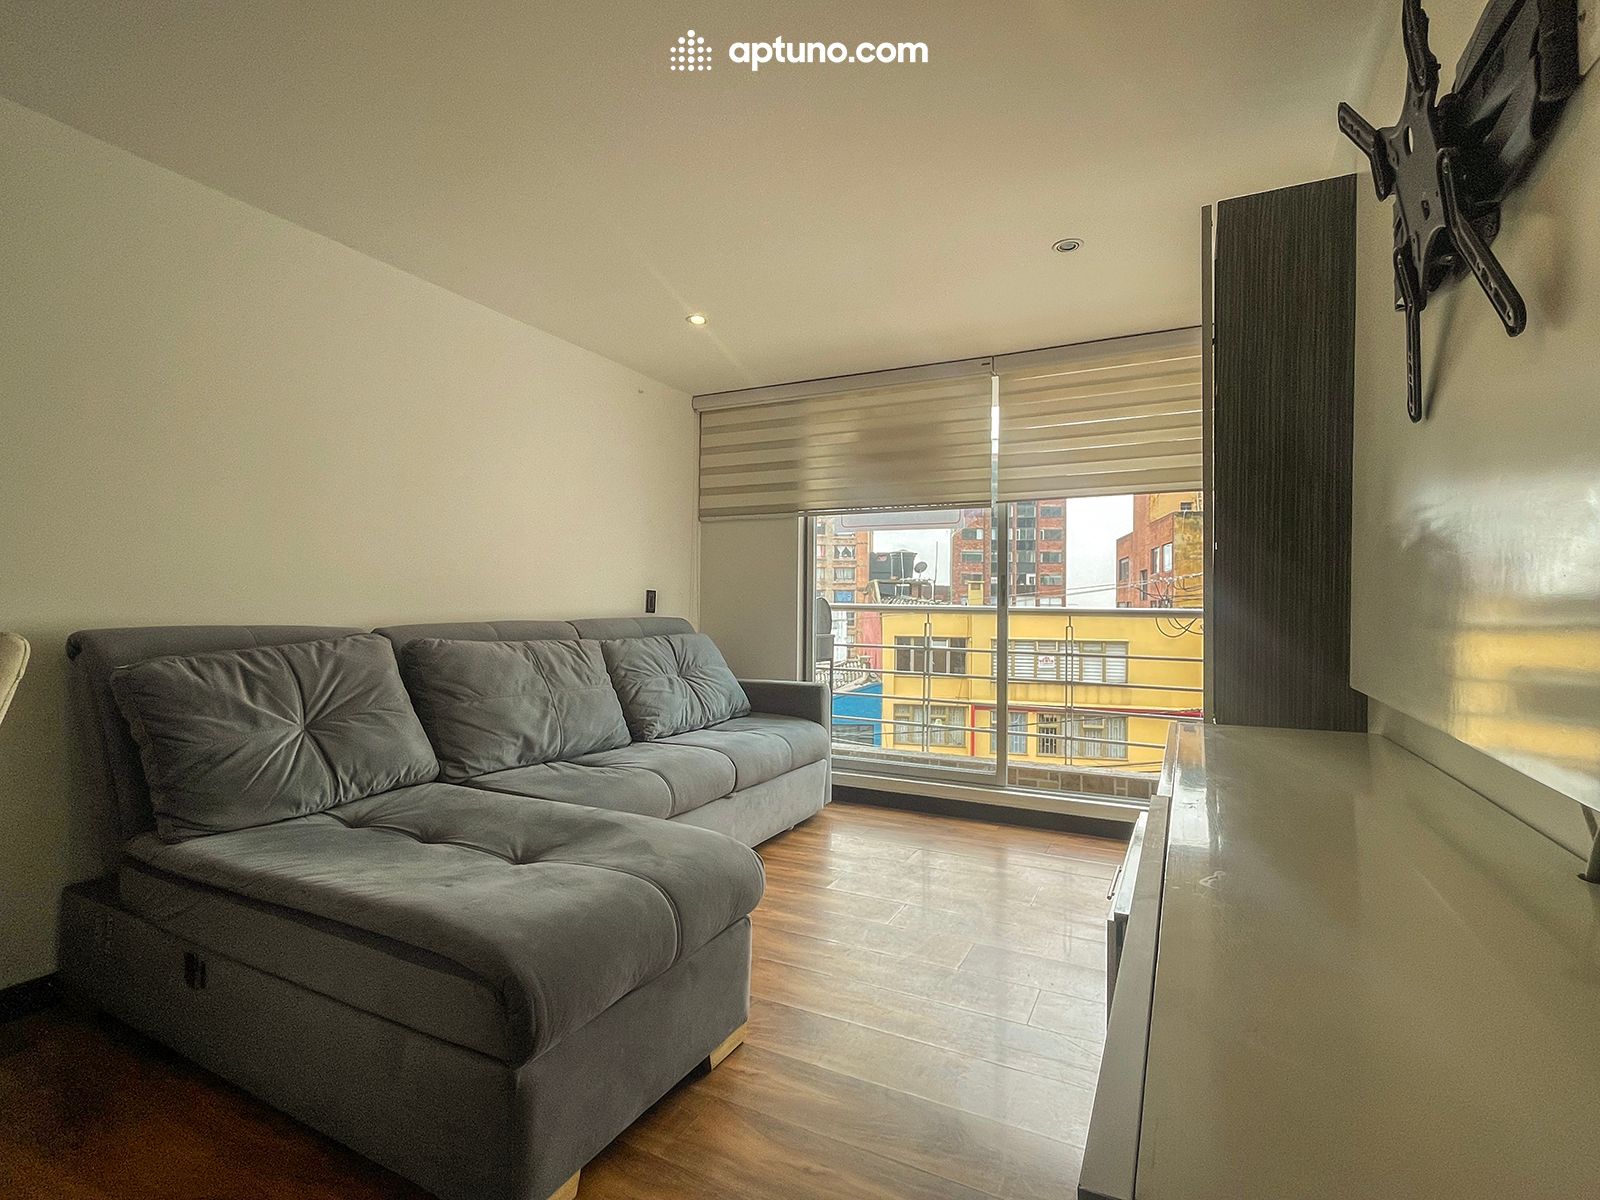 Apartamento en arriendo Pardo Rubio 68 m² - $ 2.500.000